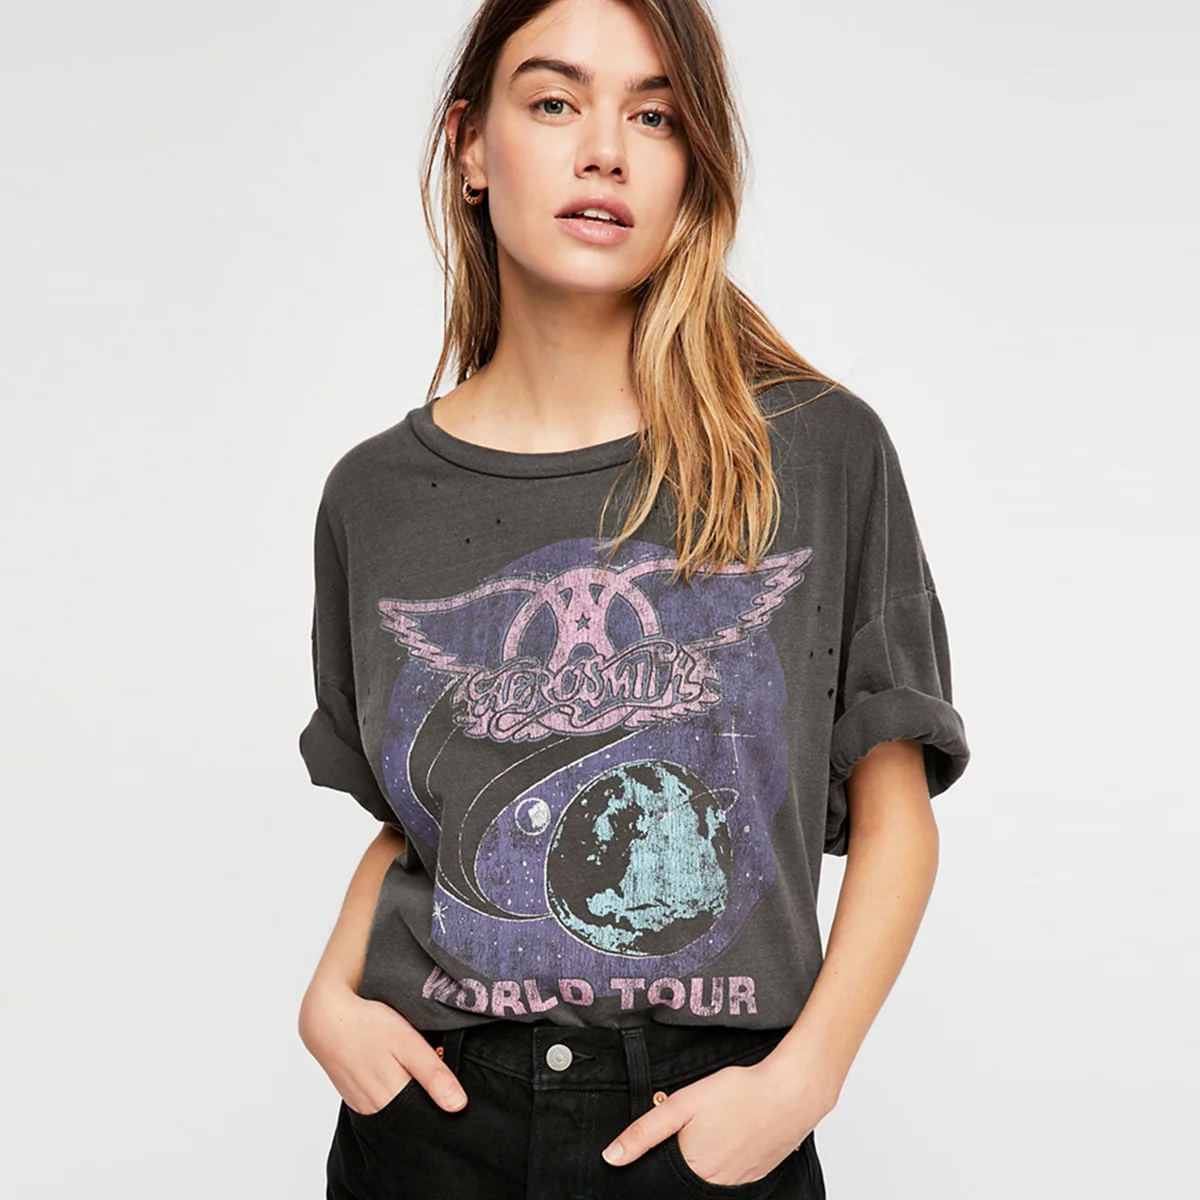 

Boyfriend Planet Print Tee Women 2020 O neck Short Sleeve Casual Shirts Tops Summer Loose Vintage Graphic Tees T Shirt Blusa